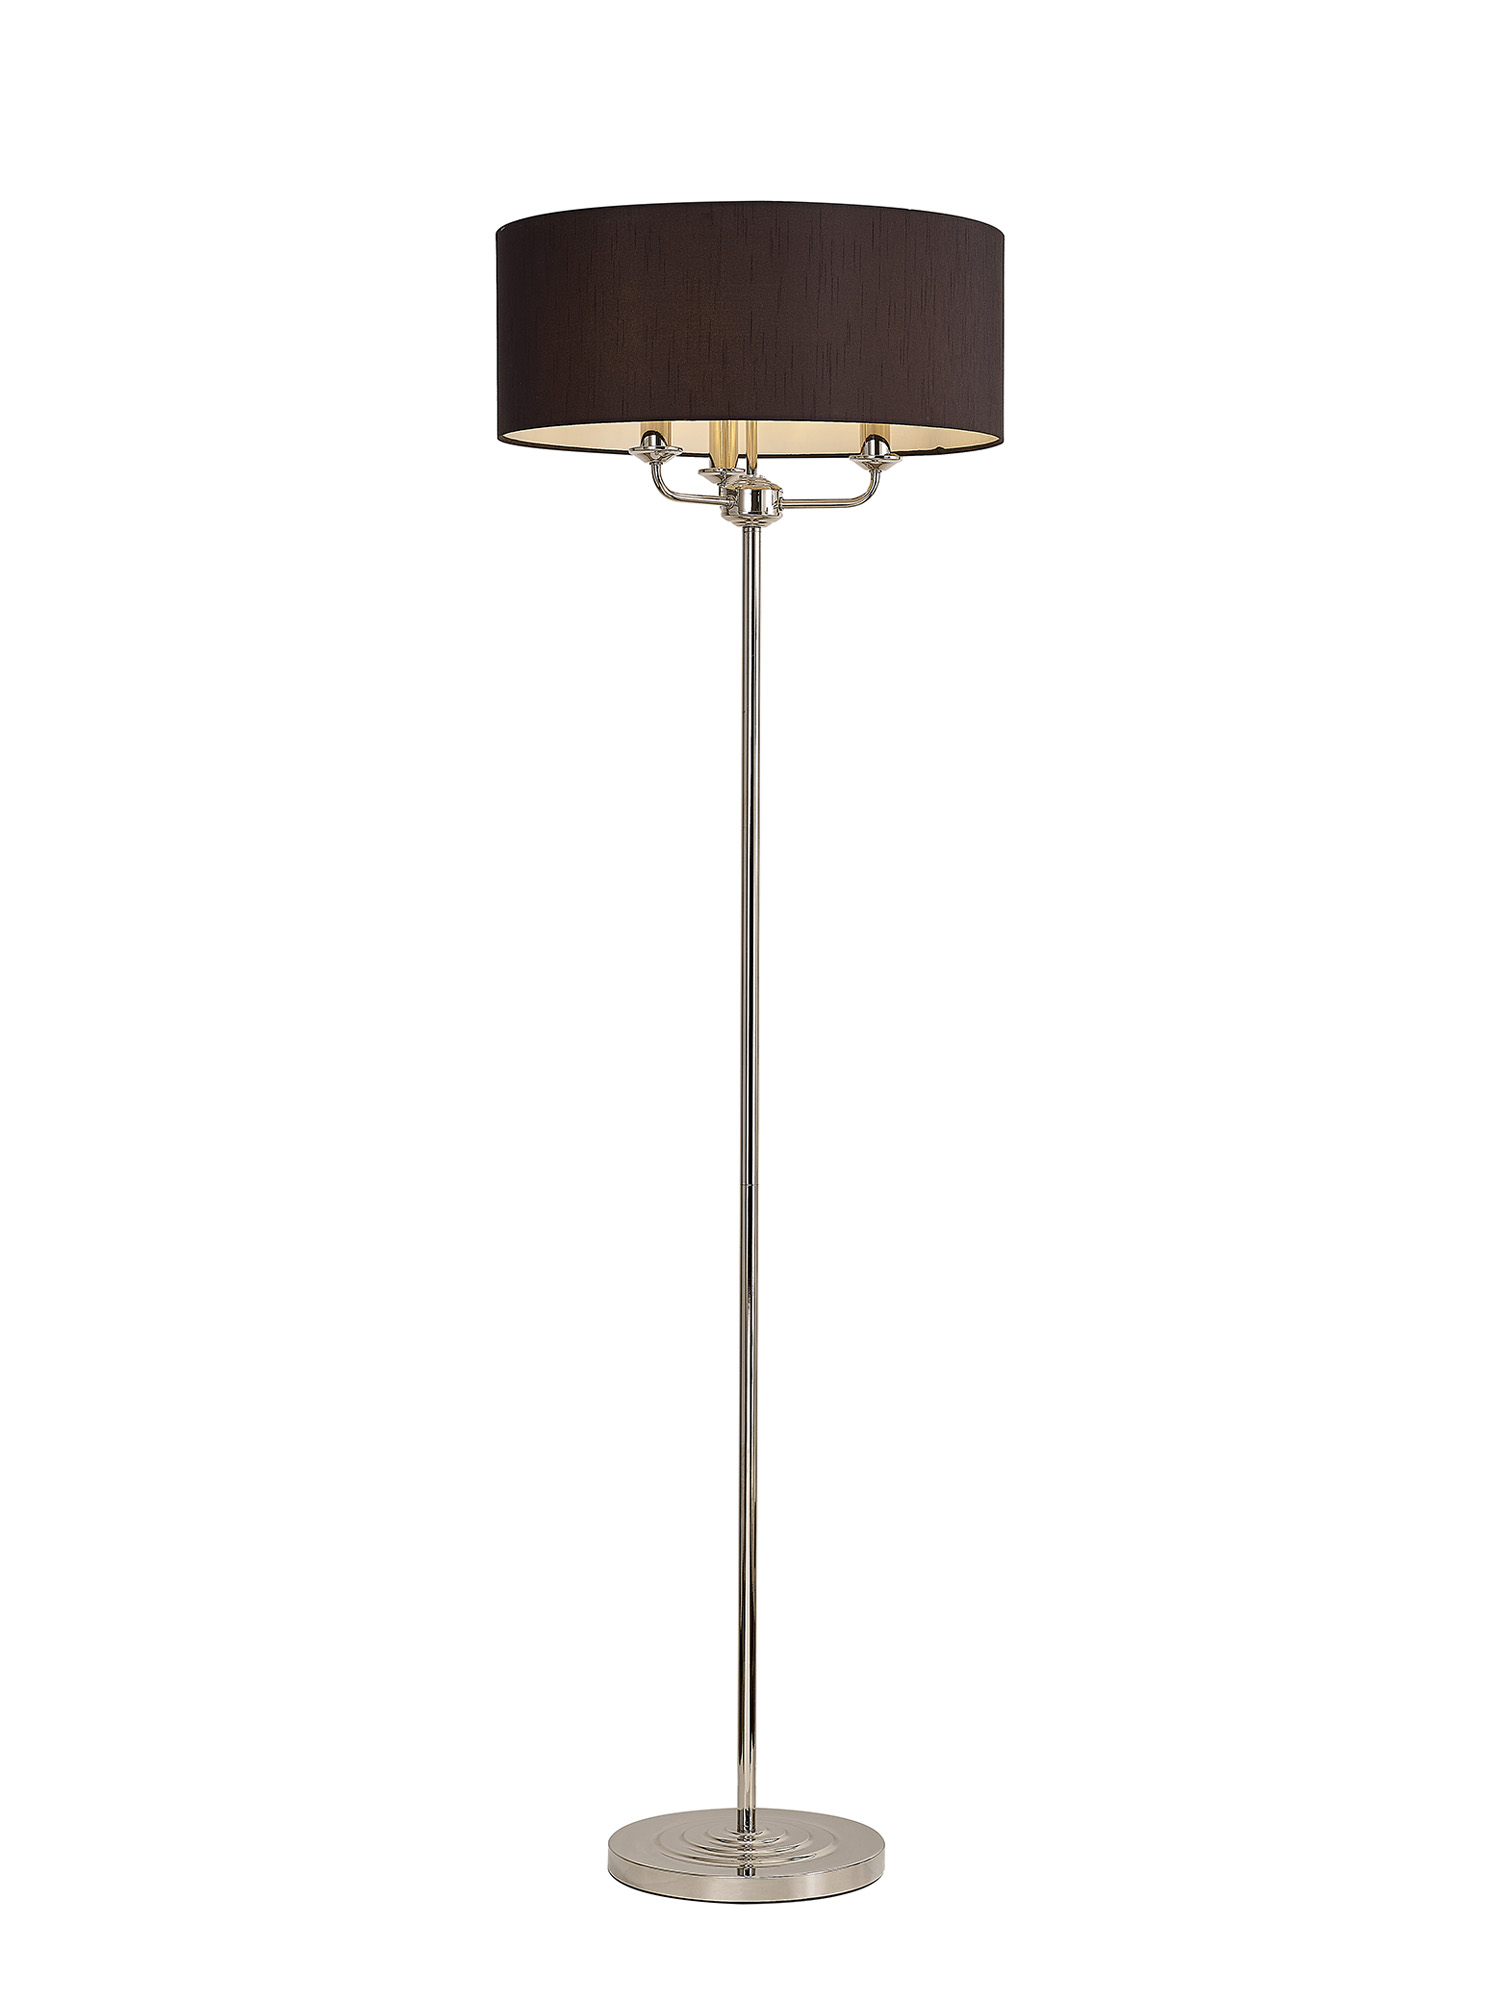 DK0892  Banyan 45cm 3 Light Floor Lamp Polished Nickel, Black